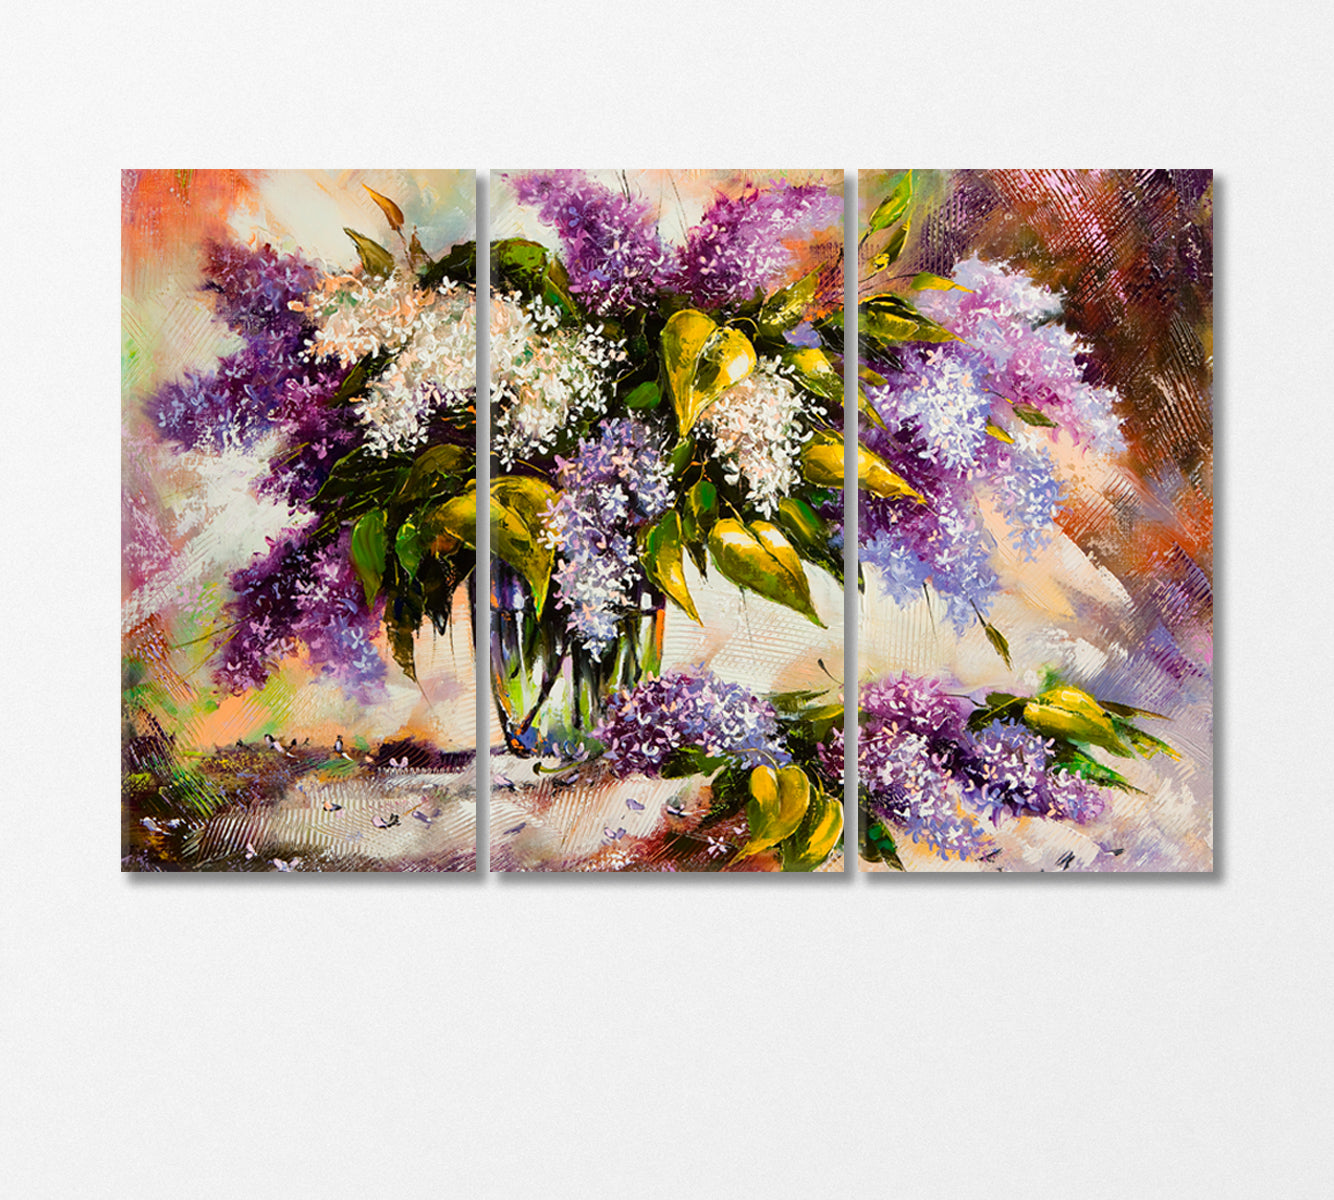 Lilac Bouquet in Vase Canvas Print-Canvas Print-CetArt-3 Panels-36x24 inches-CetArt